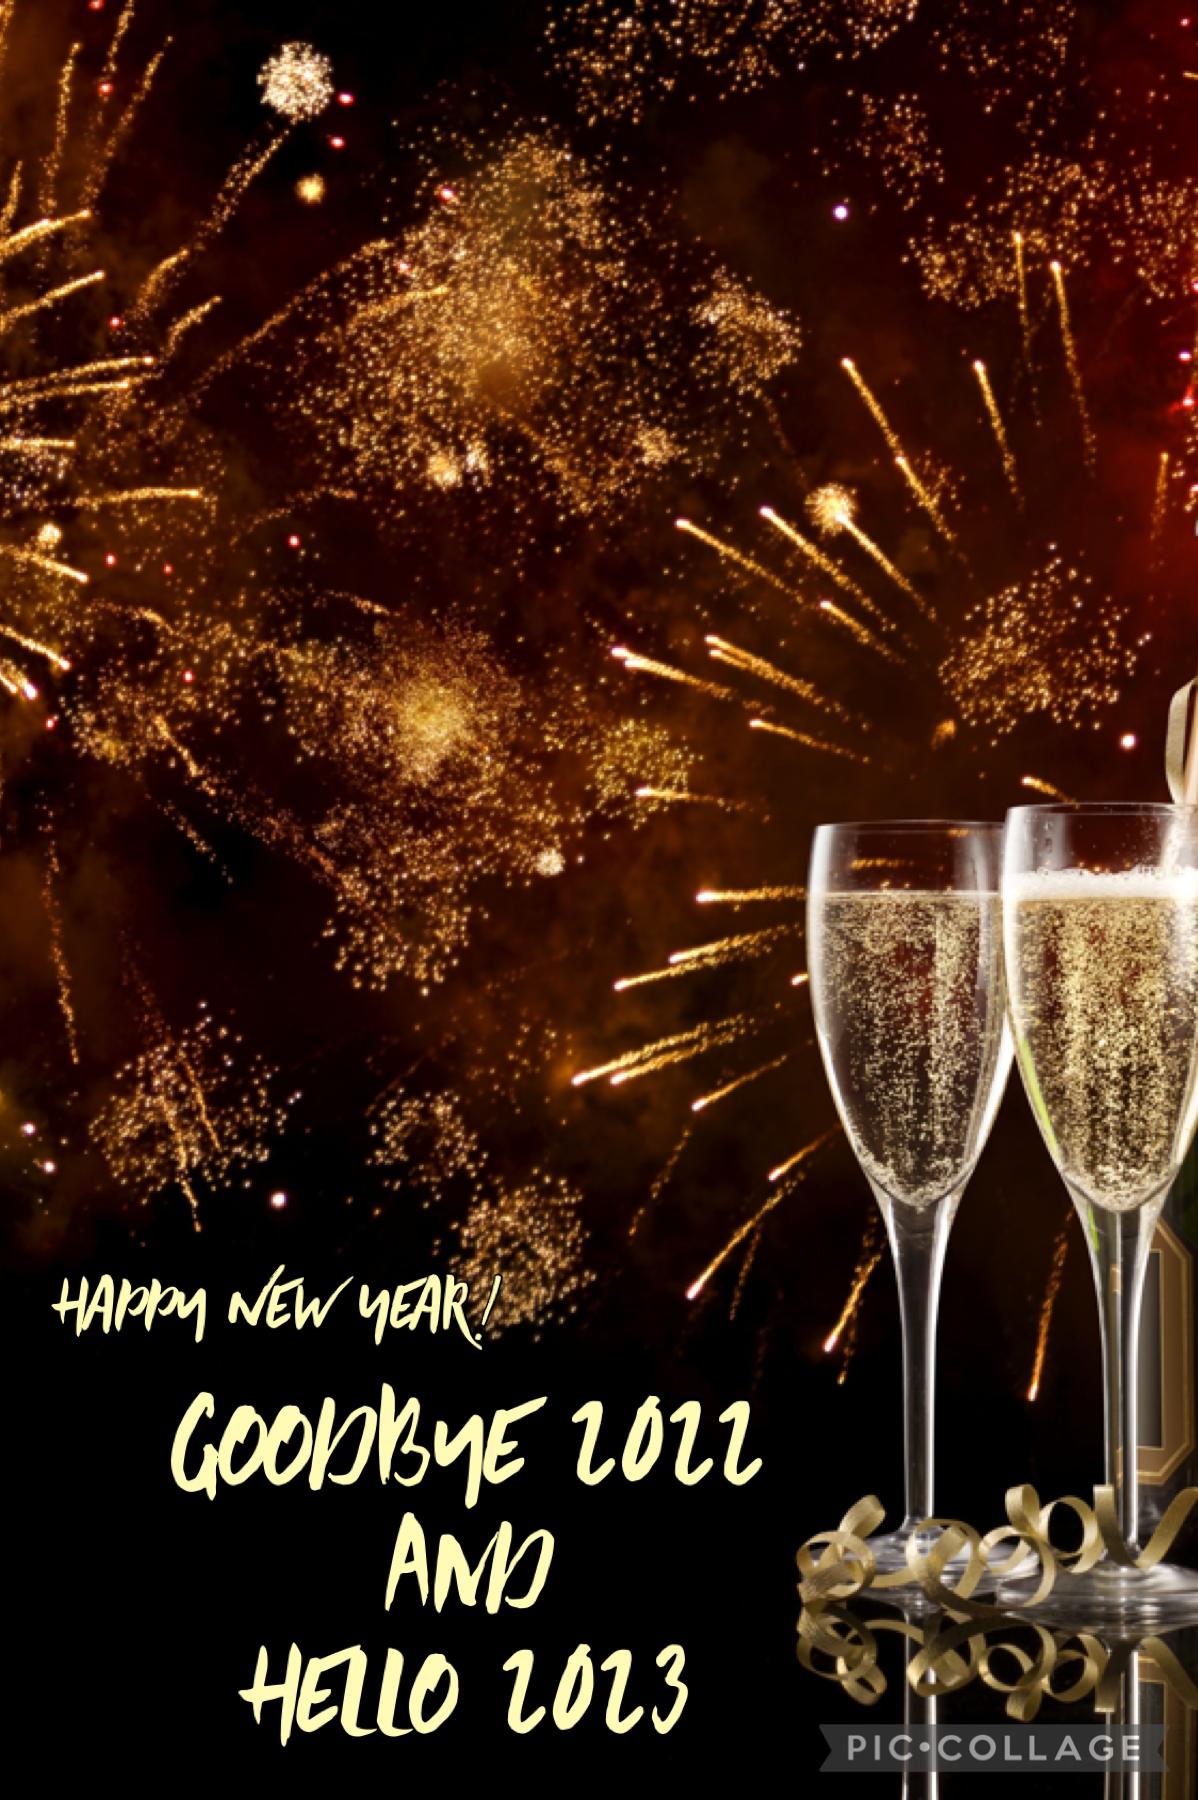 I hope you all enjoy the new year! Enjoy 2023!!